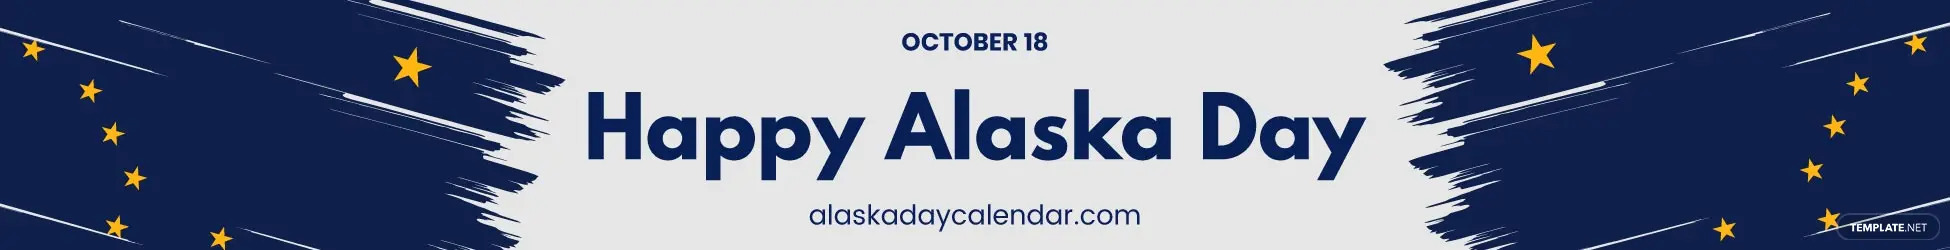 alaska day website banner